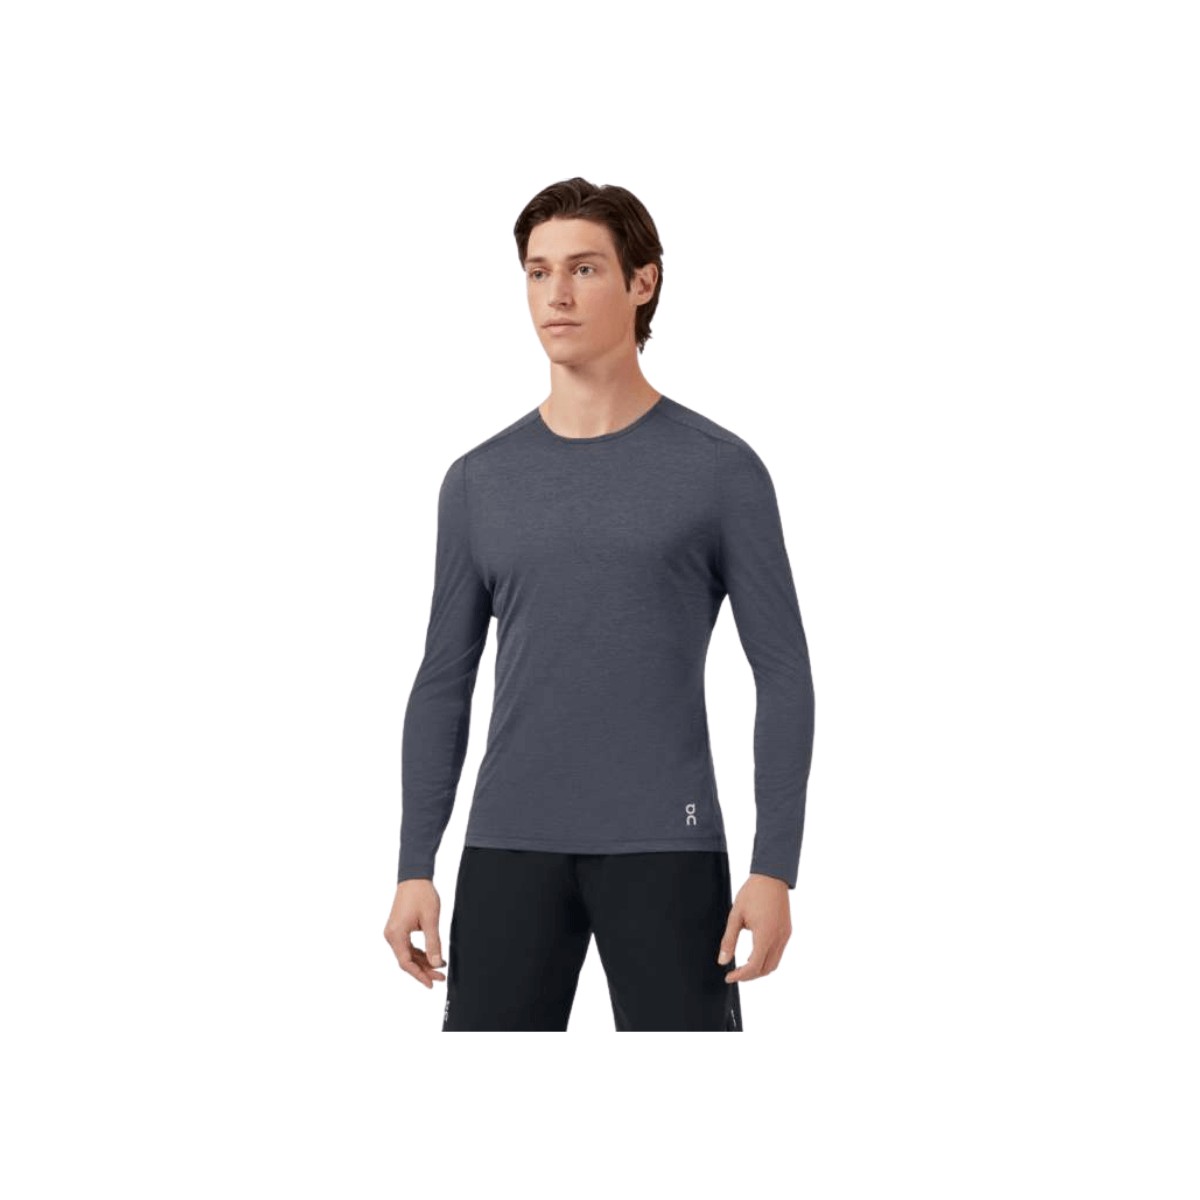 On Performance Long-T Long Sleeve Gray T-Shirt, Size XL